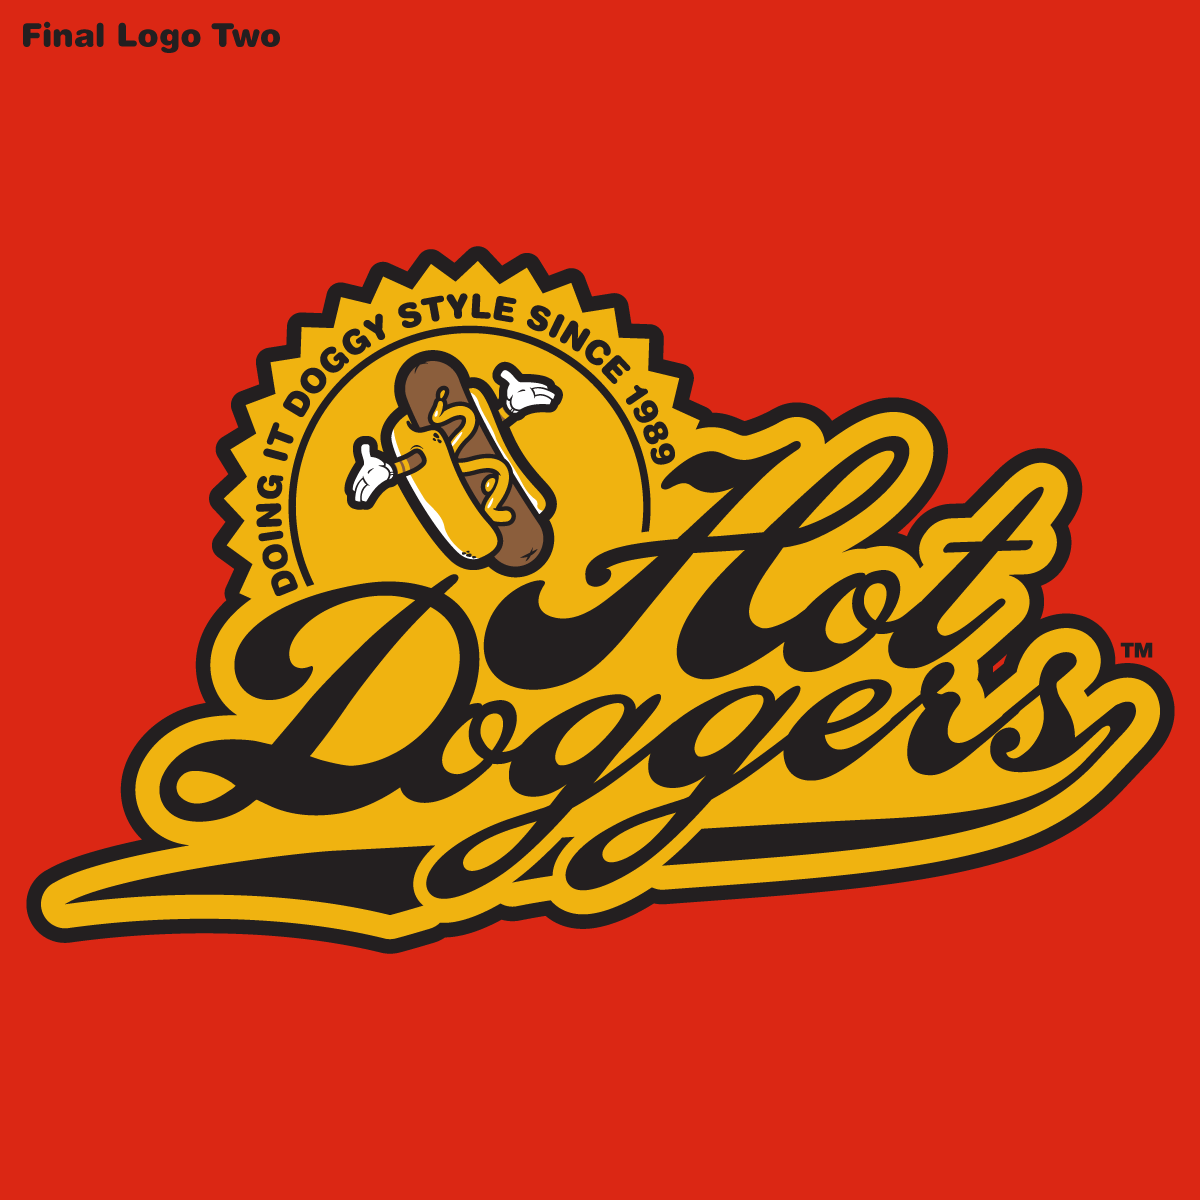 Hot dog doggers jthree concepts j3 jared nickerson logo Character vector Ski mountain apparel textile